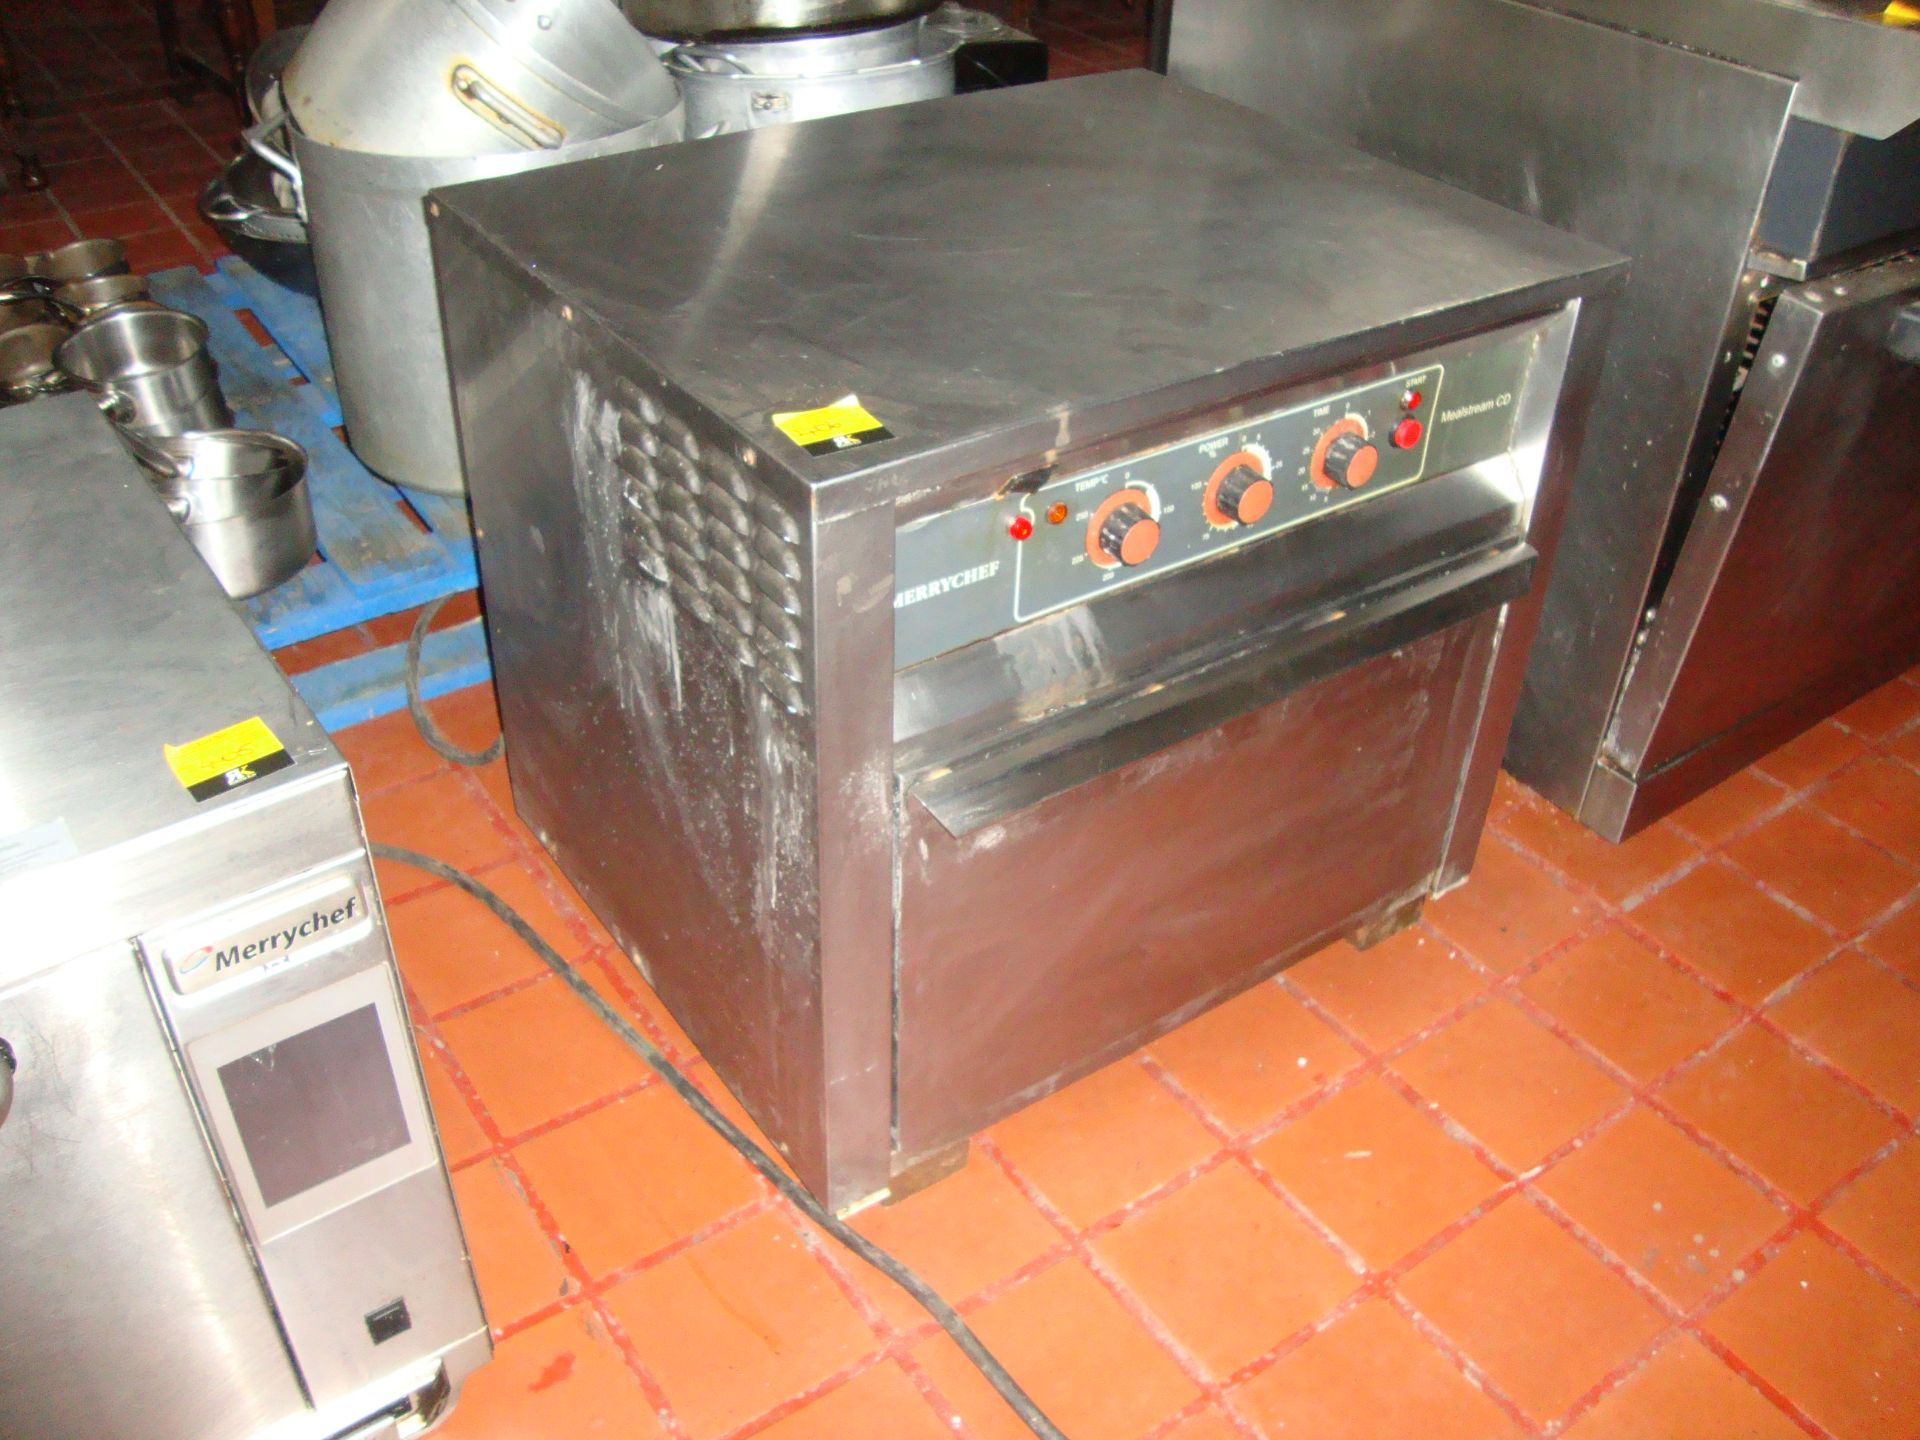 Merrychef Mealstream multifunction oven